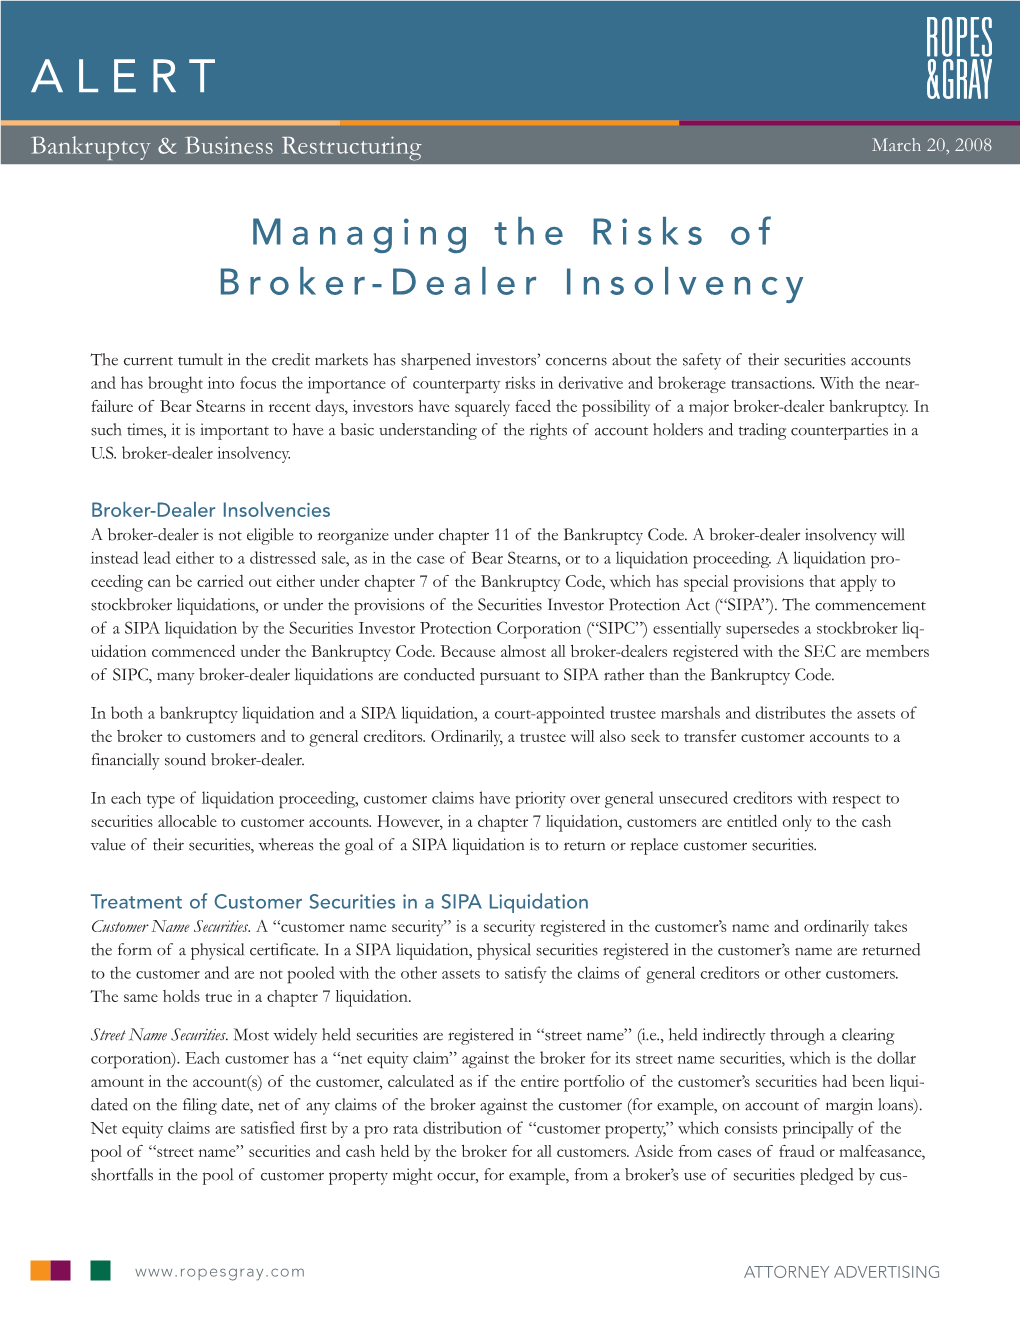 Managing the Risks of Broker-Dealer Insolvency